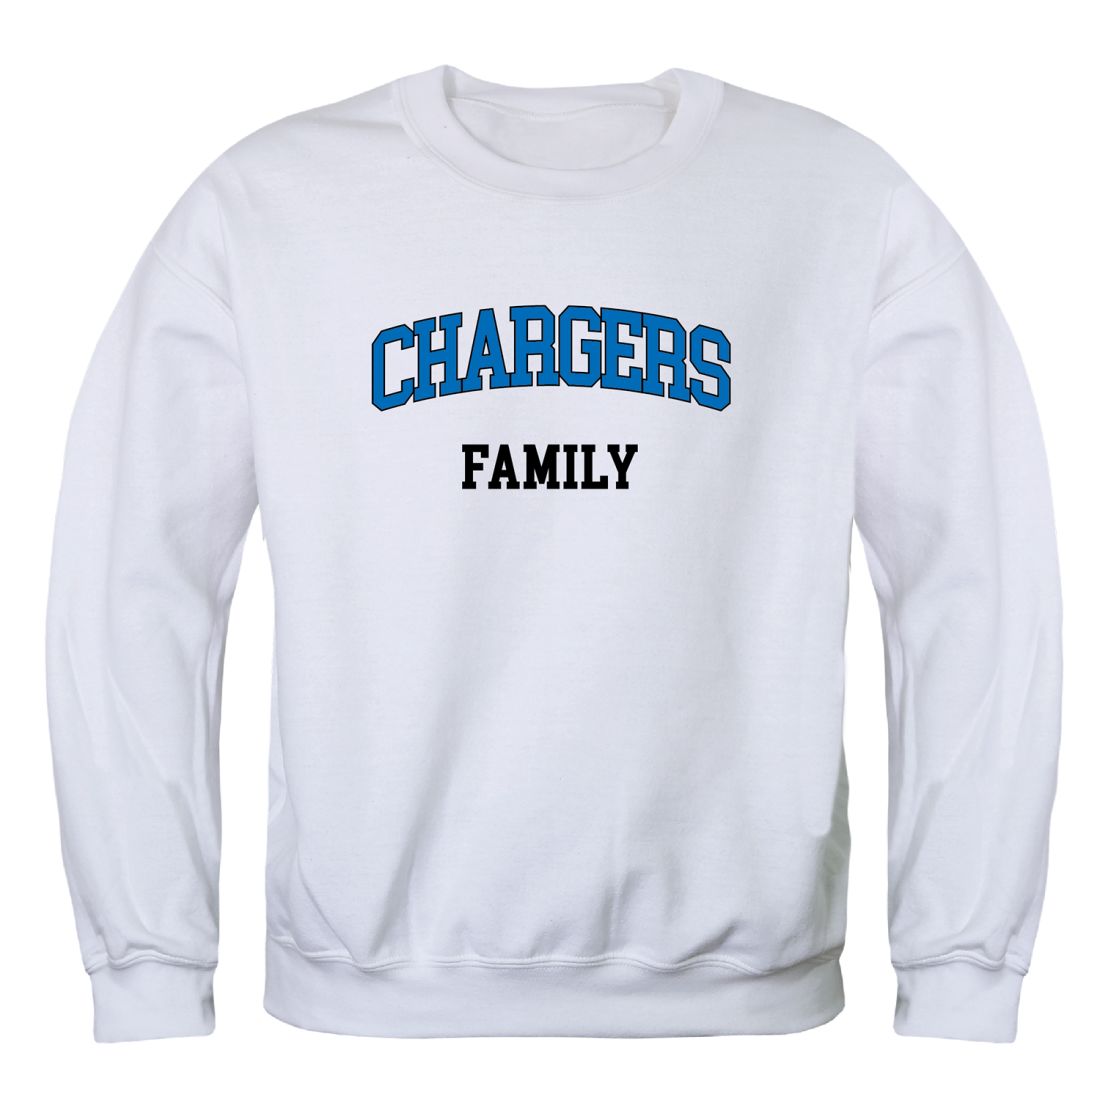 The-University-of-Alabama-in-Huntsville-Chargers-Family-Fleece-Crewneck-Pullover-Sweatshirt